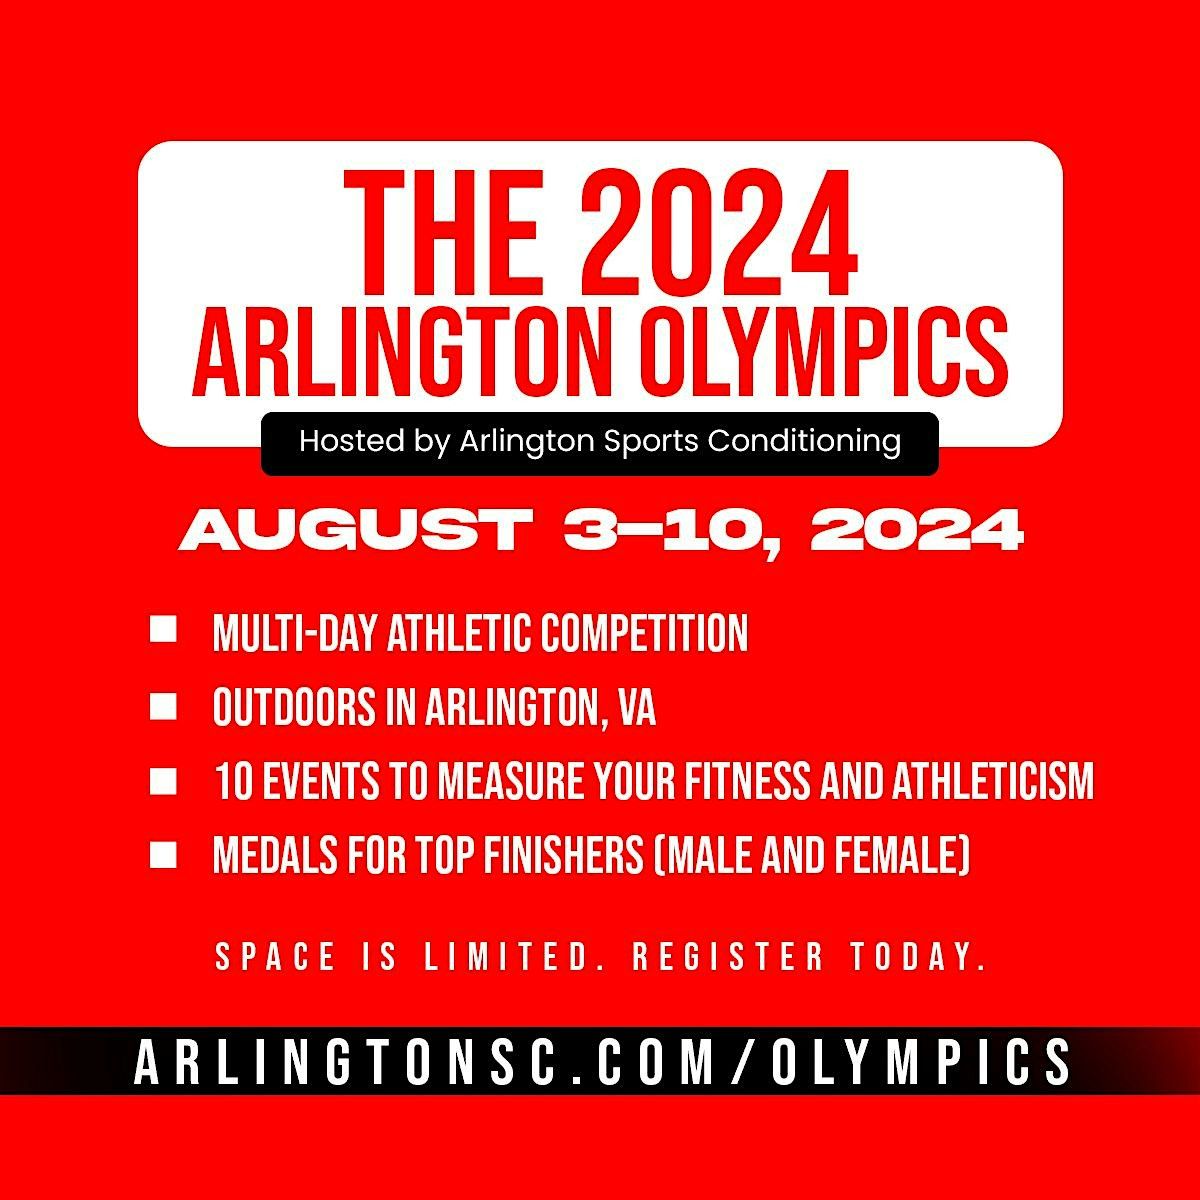 The 2024 Arlington Olympics: Day 4 of 5 (Morning Option)